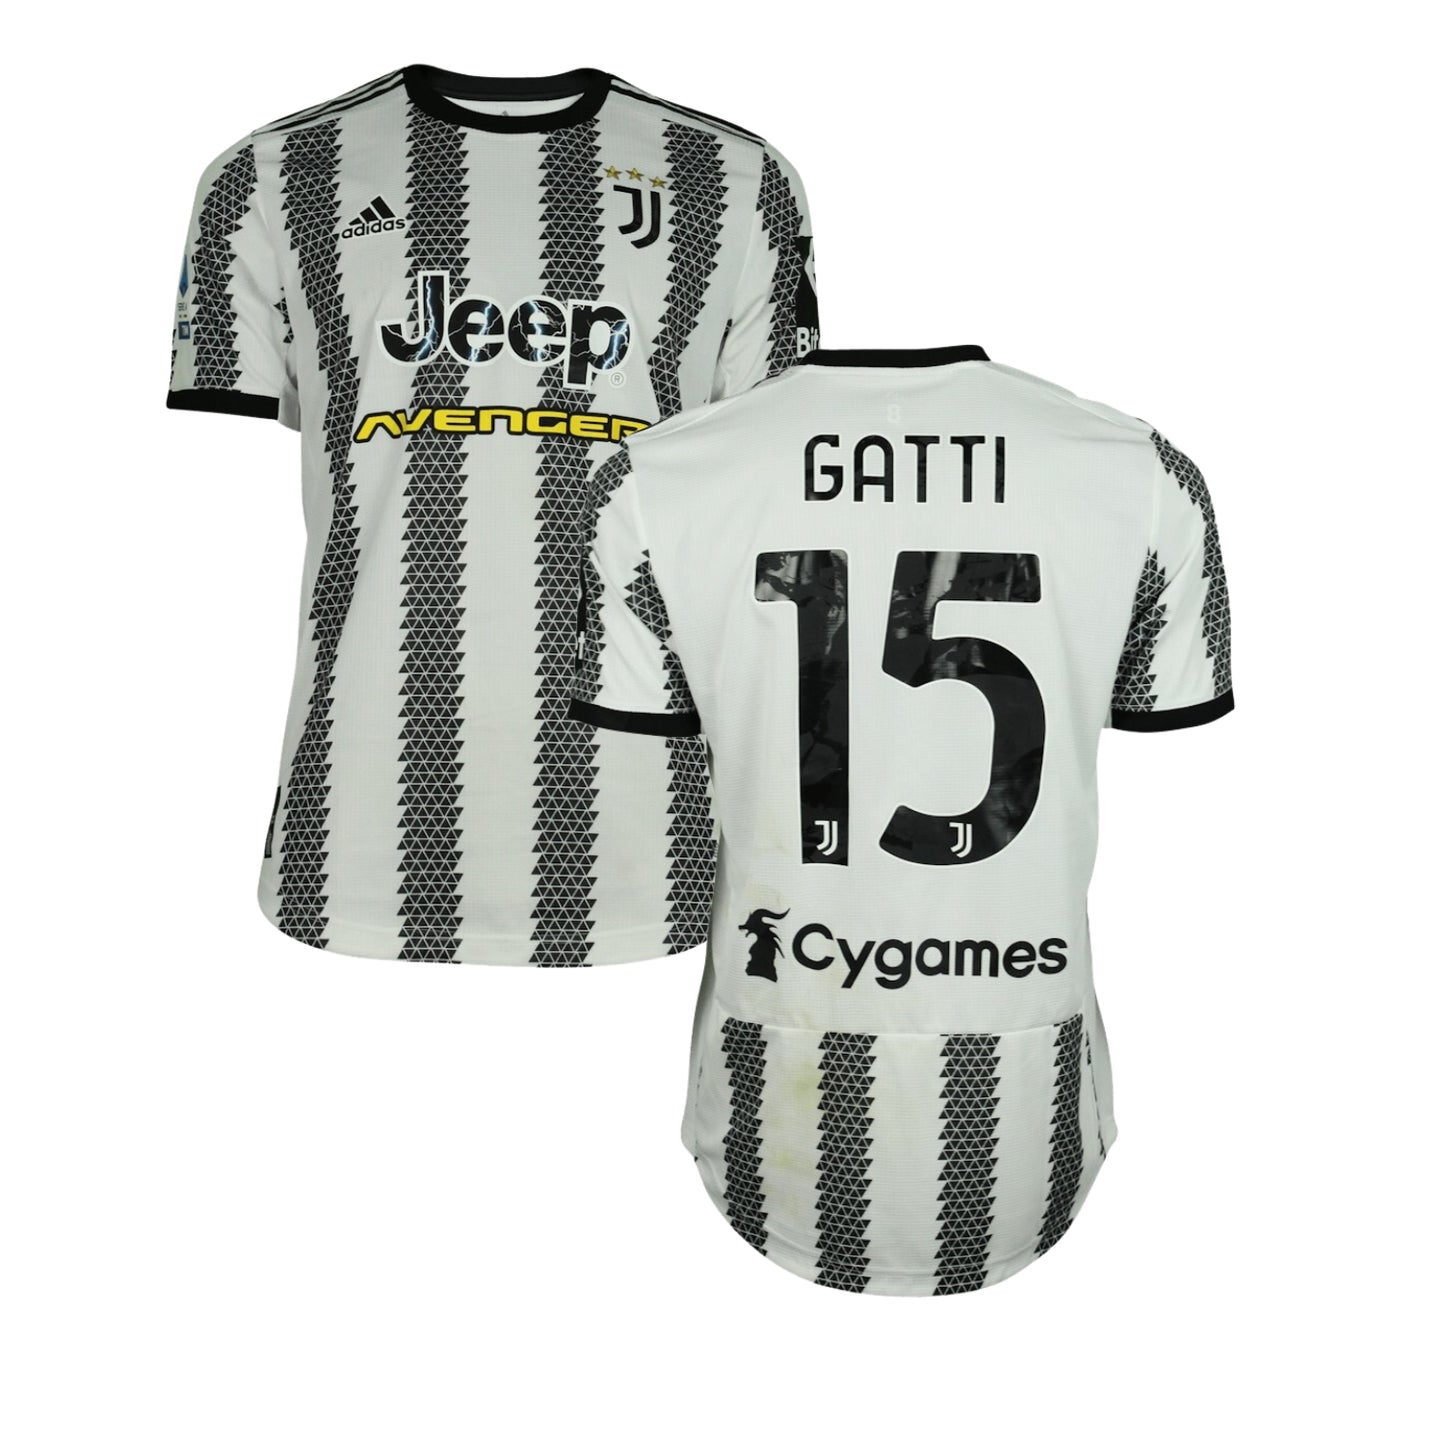 Federico Gatti Juventus 15 Jersey